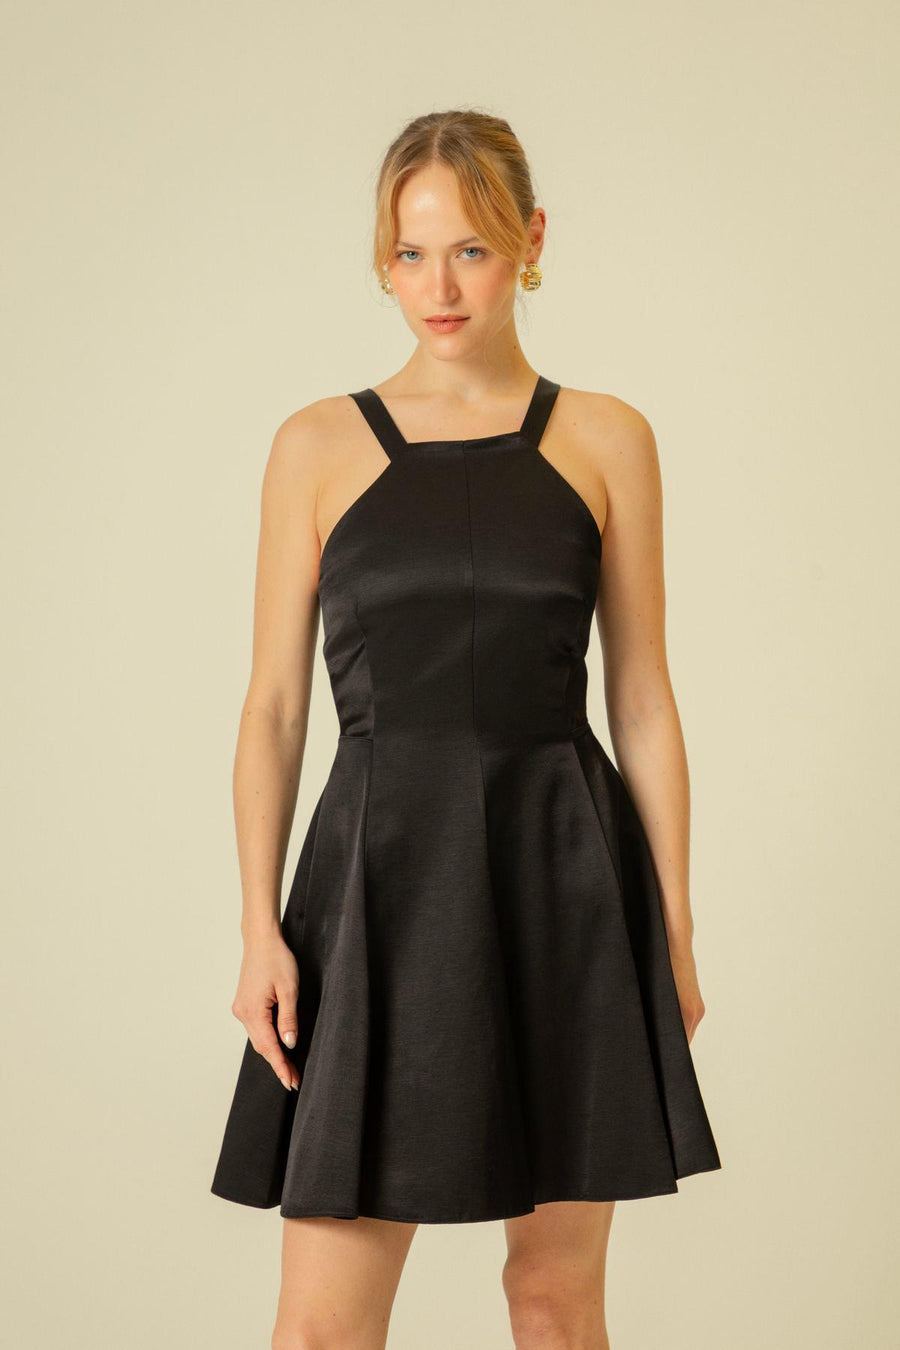 RUE Les Createurs Black Short Dress with Thin Straps & Pockets - Porterist 4